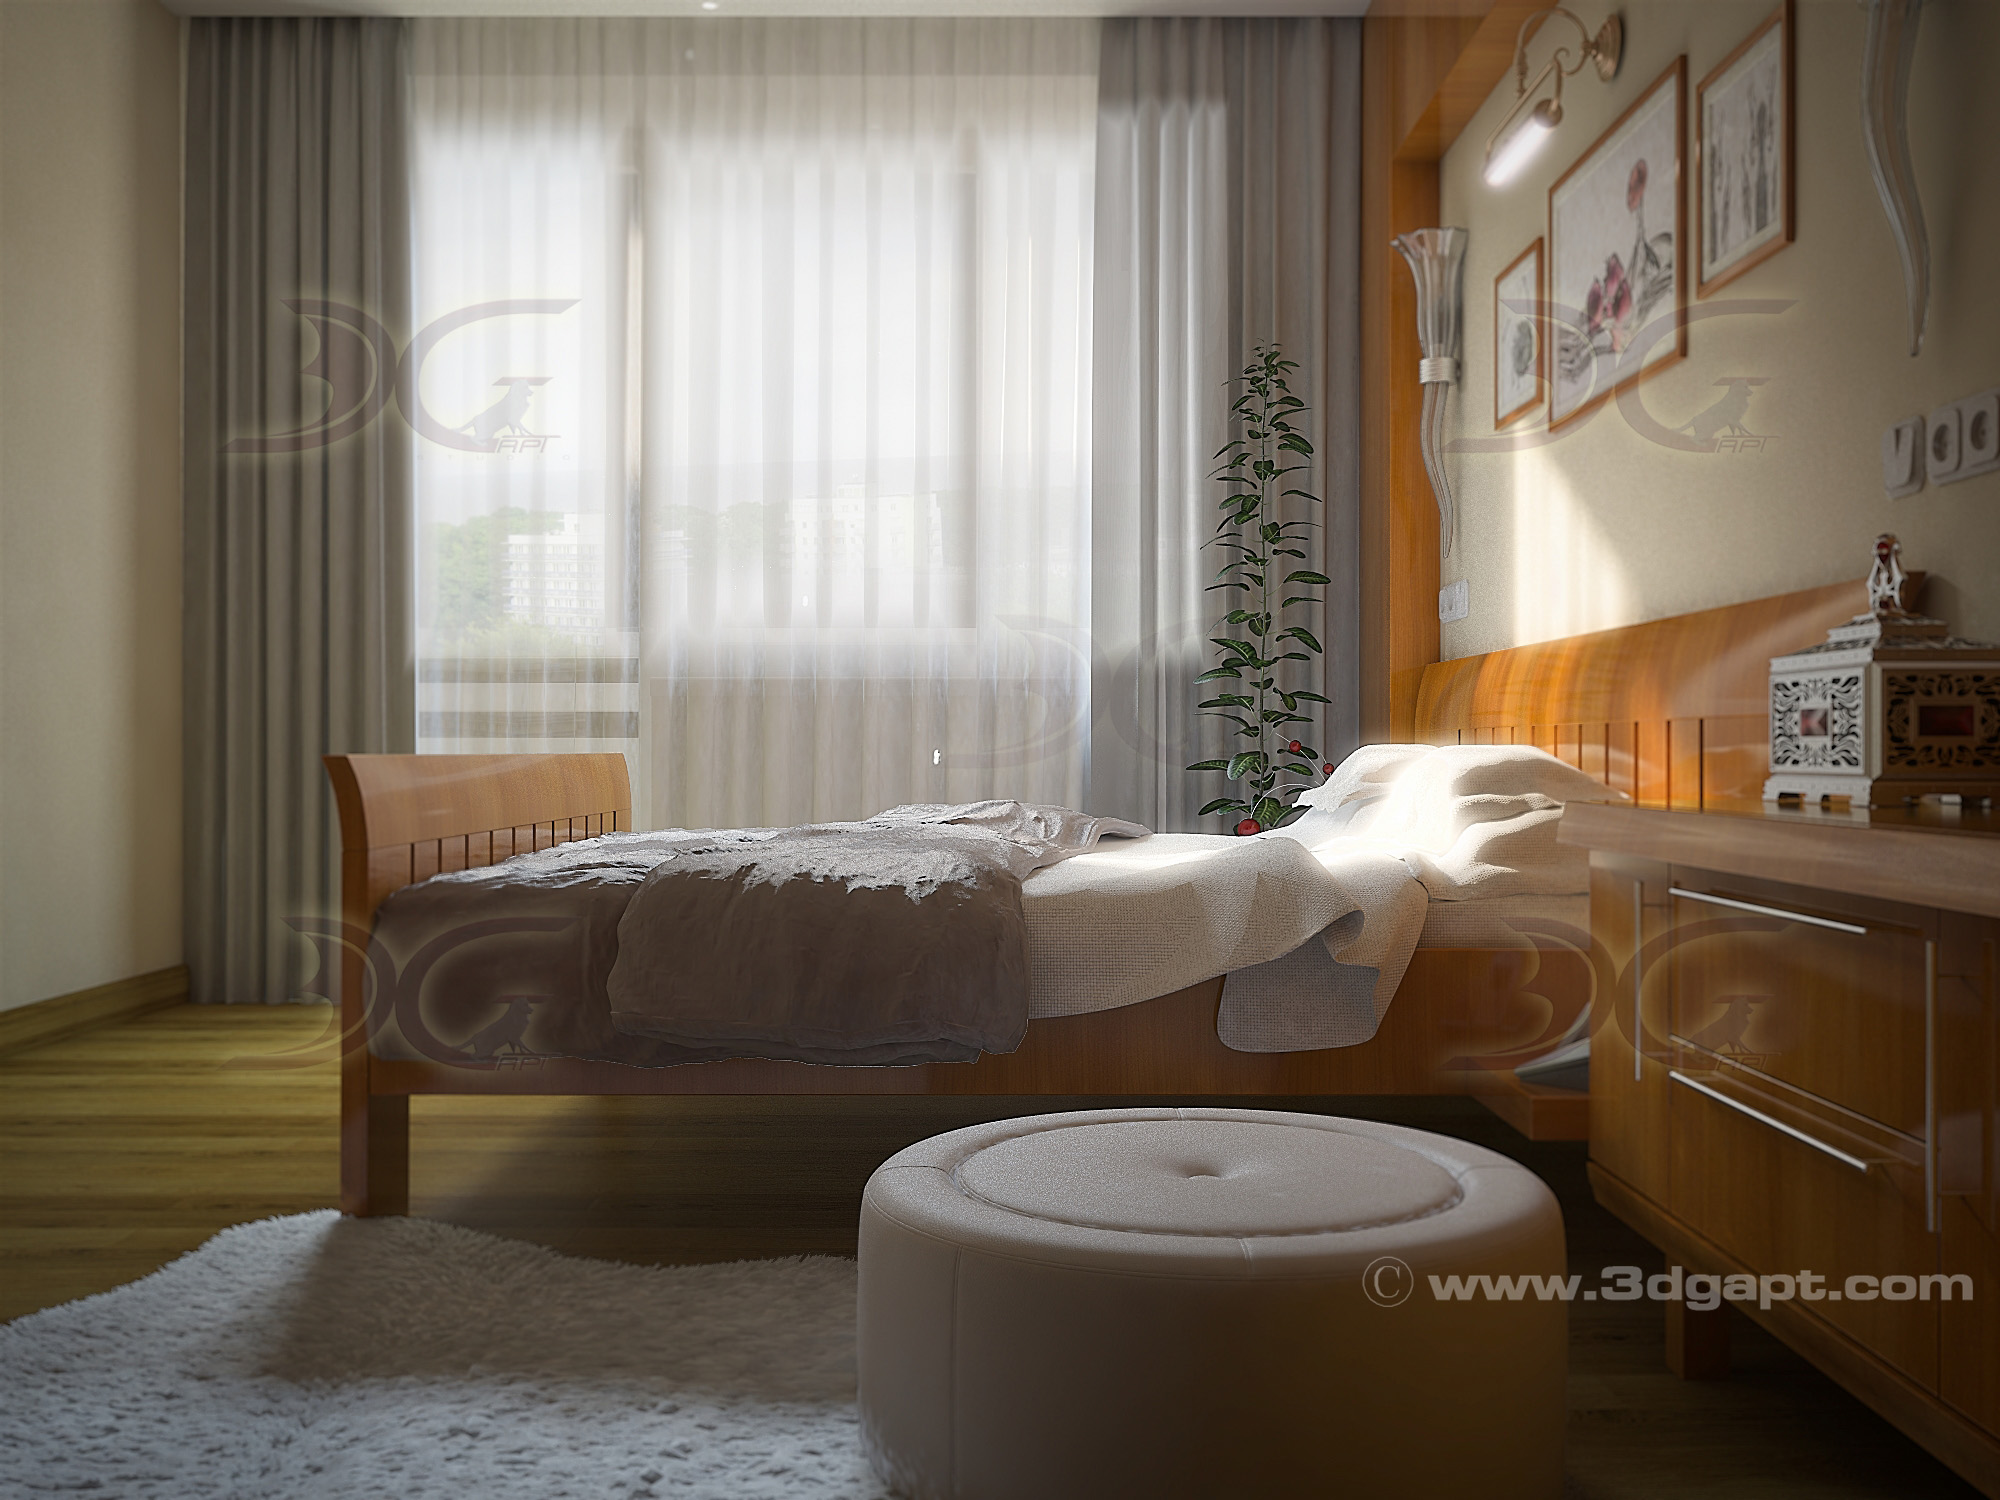 architecture interior bedroom-2 009